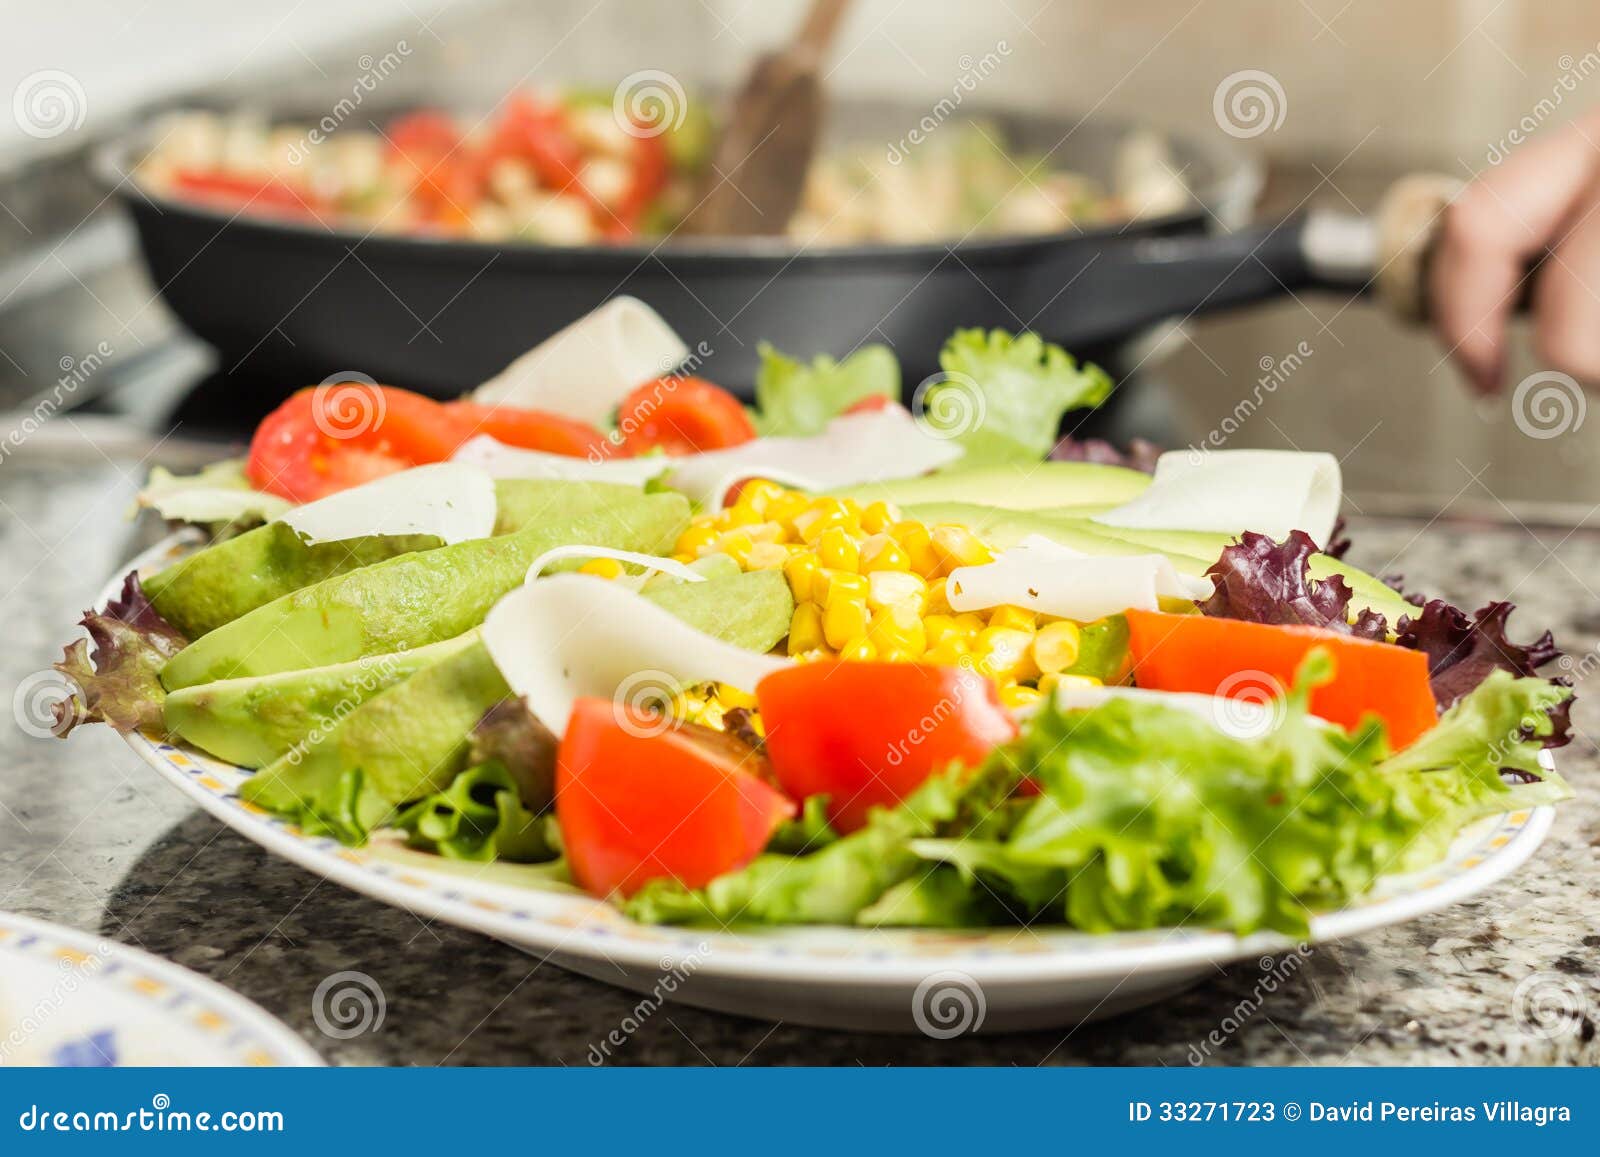 https://thumbs.dreamstime.com/z/closeup-fresh-salad-dish-female-cooking-pan-black-background-33271723.jpg